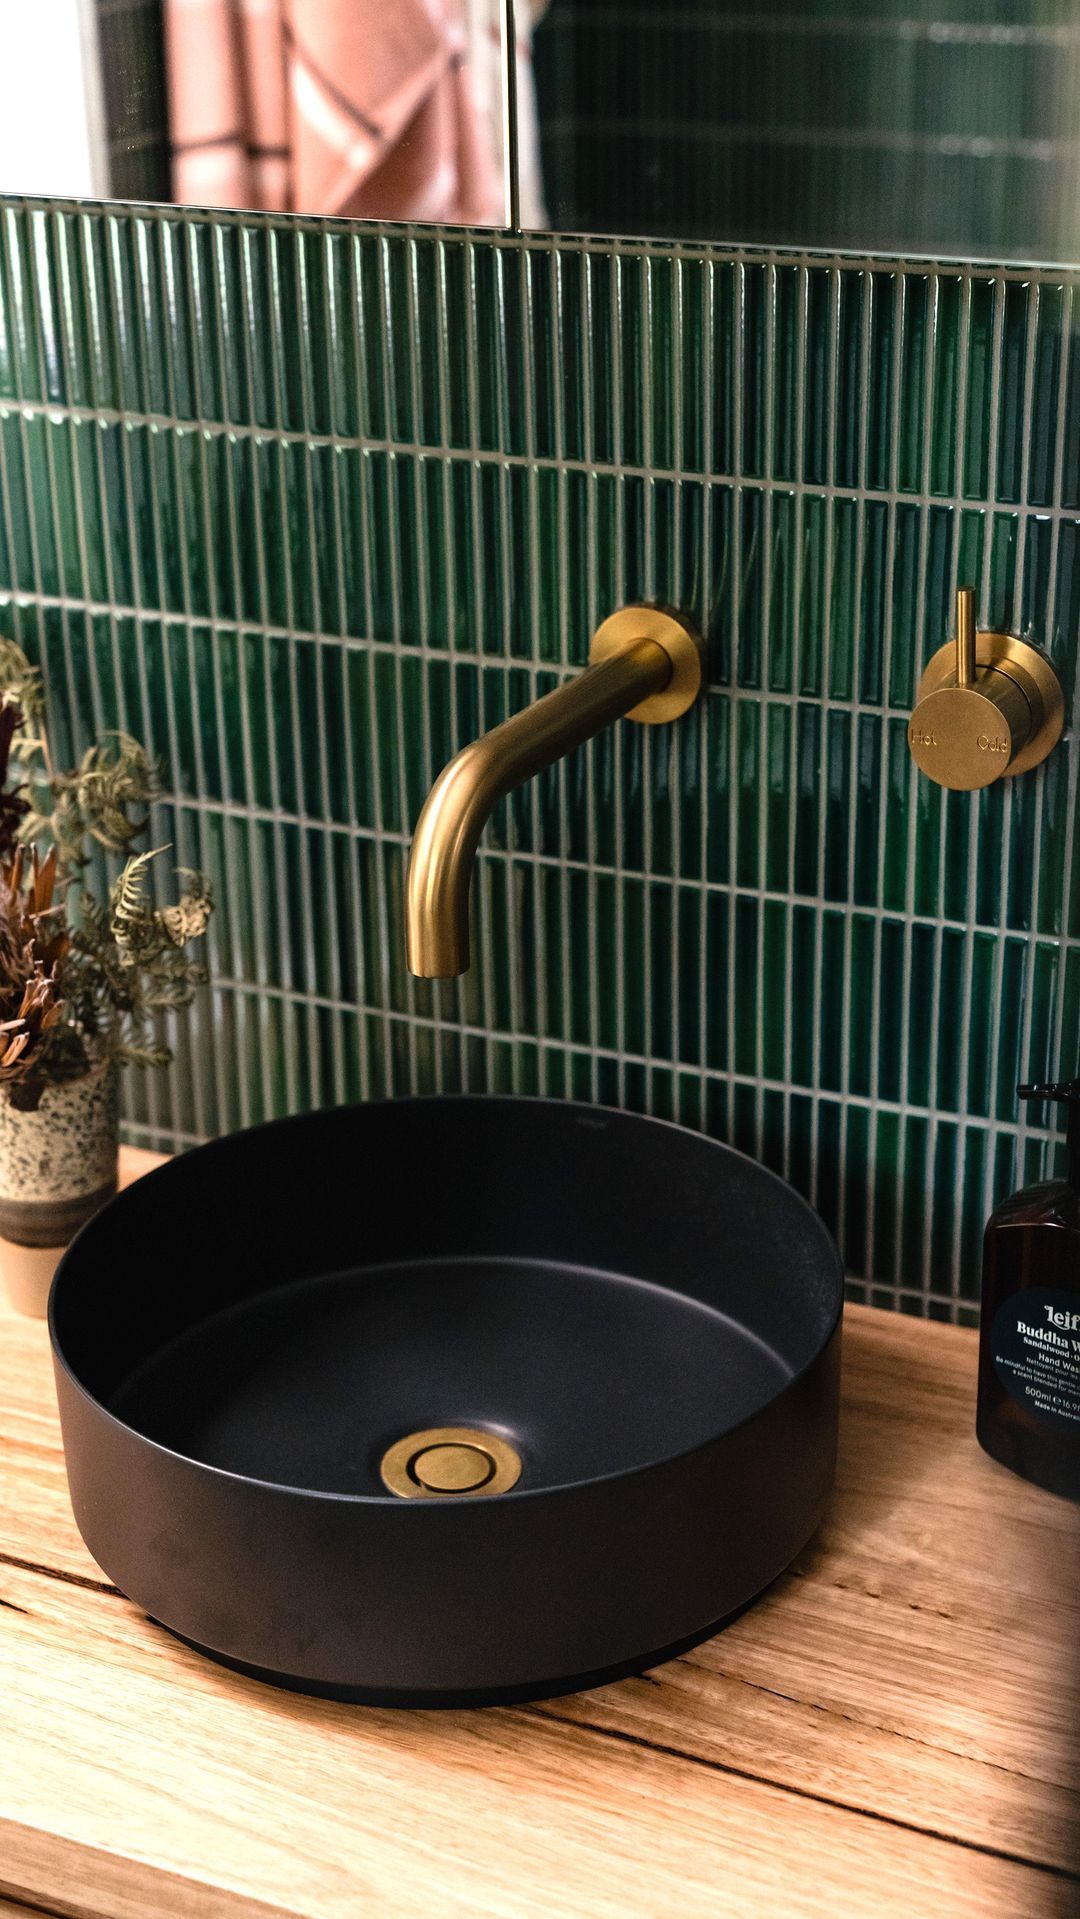 Mosaic Bathroom Tiles Design Ideas